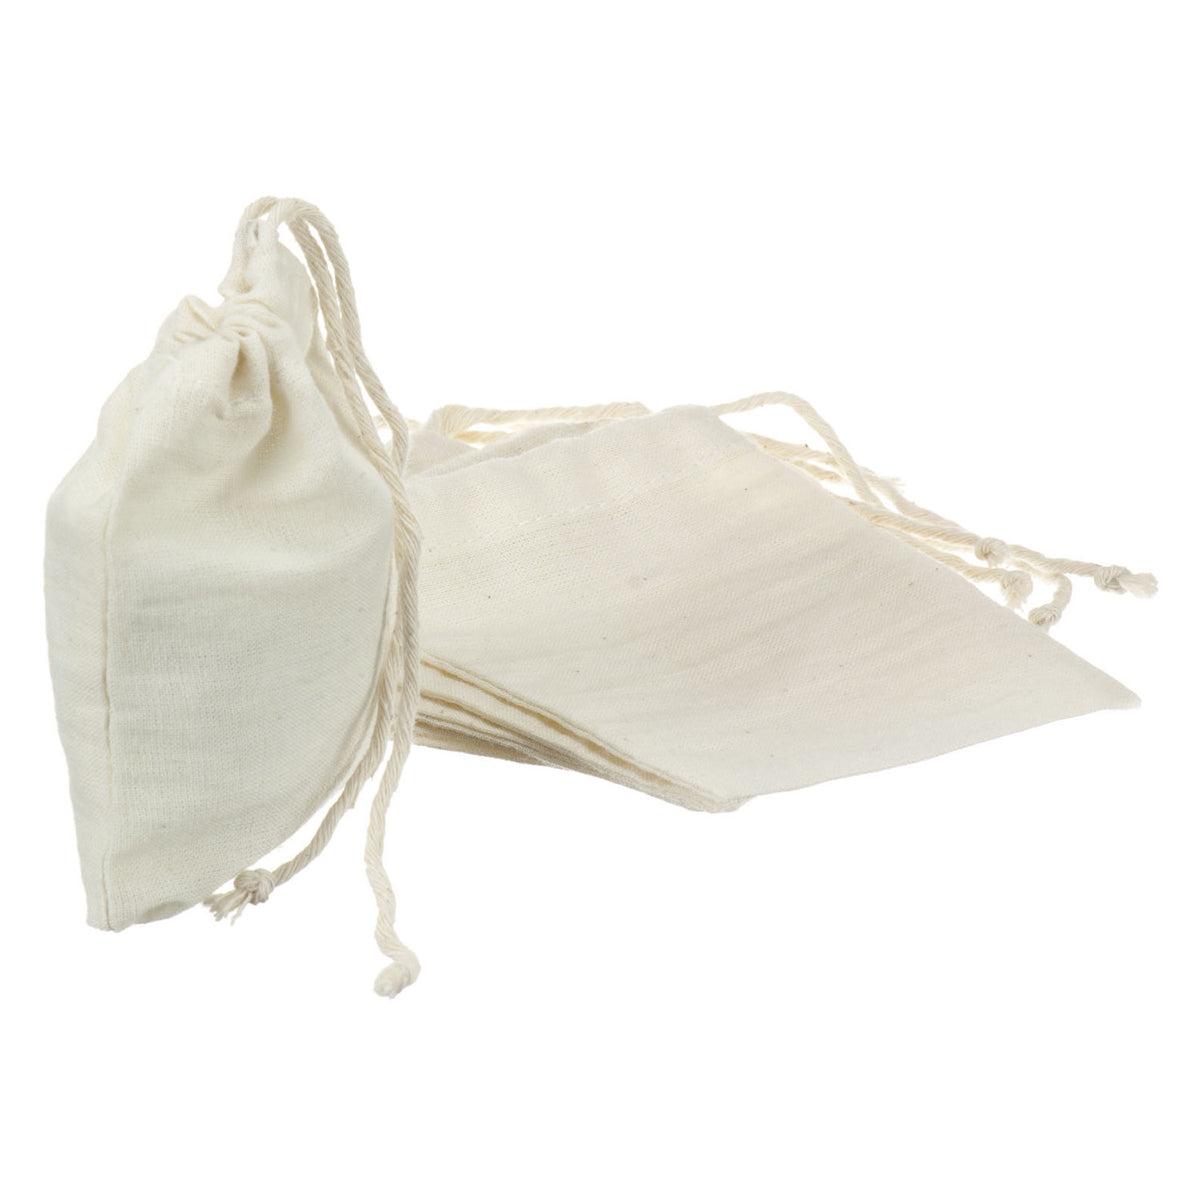 Reusable Muslin Tea Bags (5)